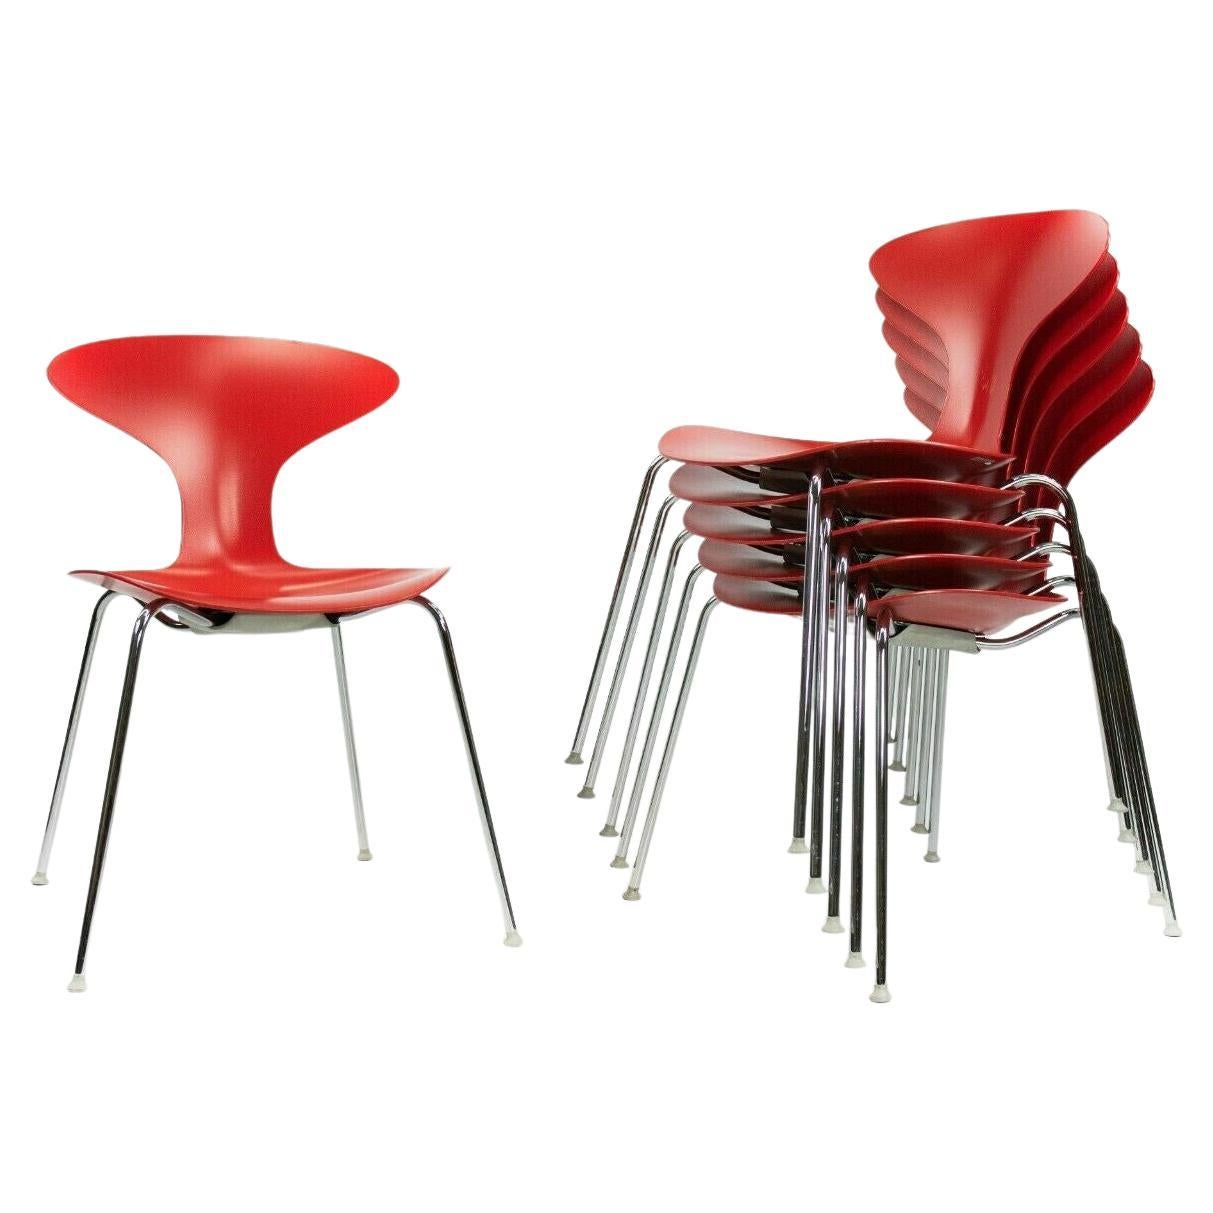 2010s Ross Lovegrove Orbit Chair by Bernhardt Design in Red Plastic Chrome Legs For Sale